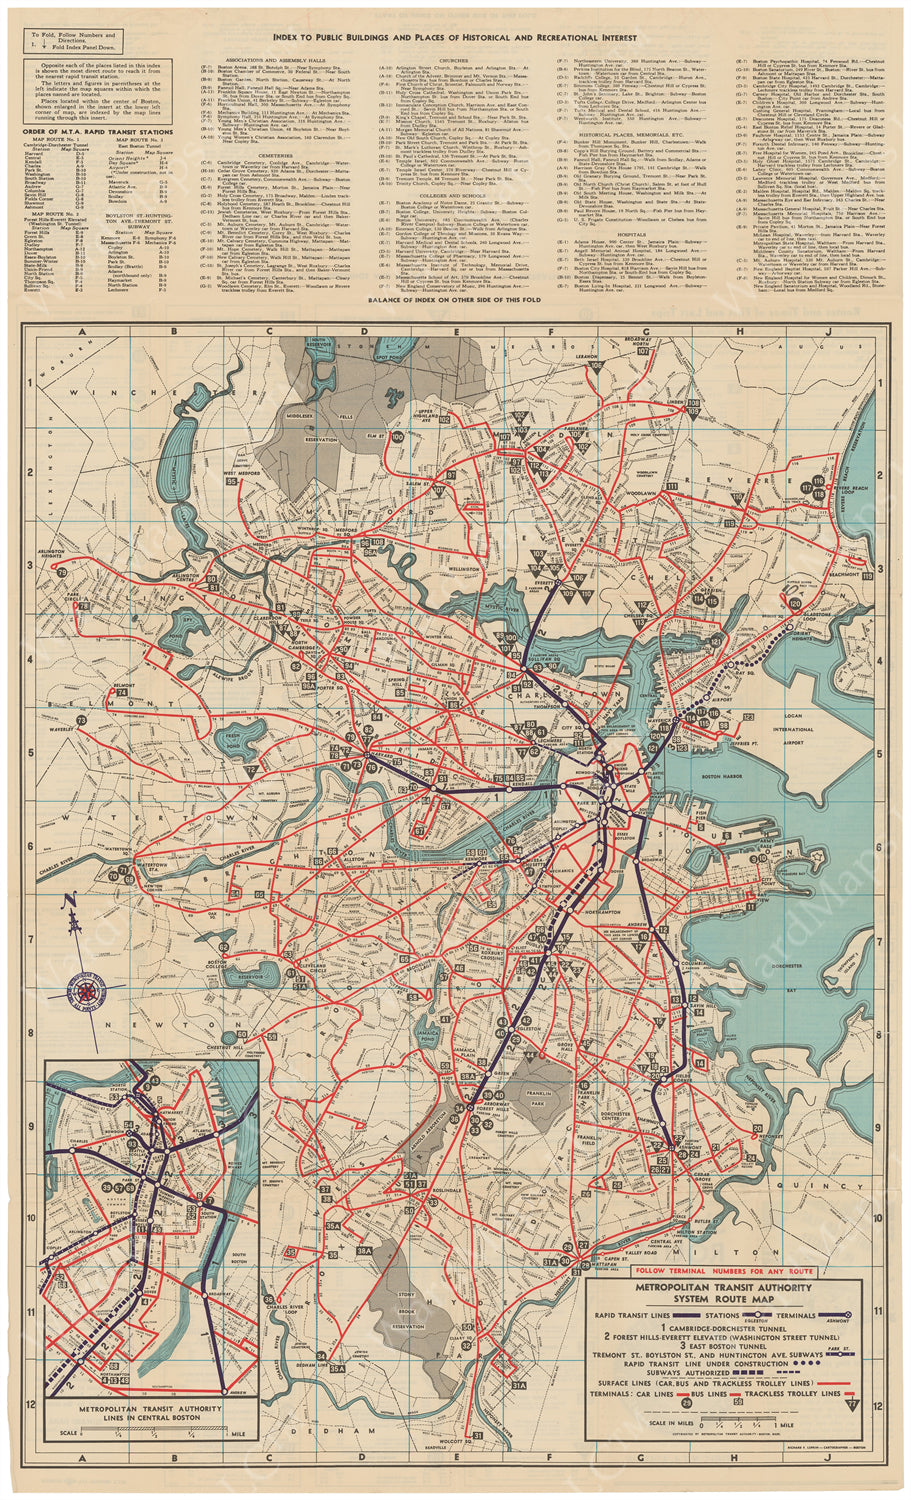 Boston, Massachusetts MTA System Route Map #2 1951